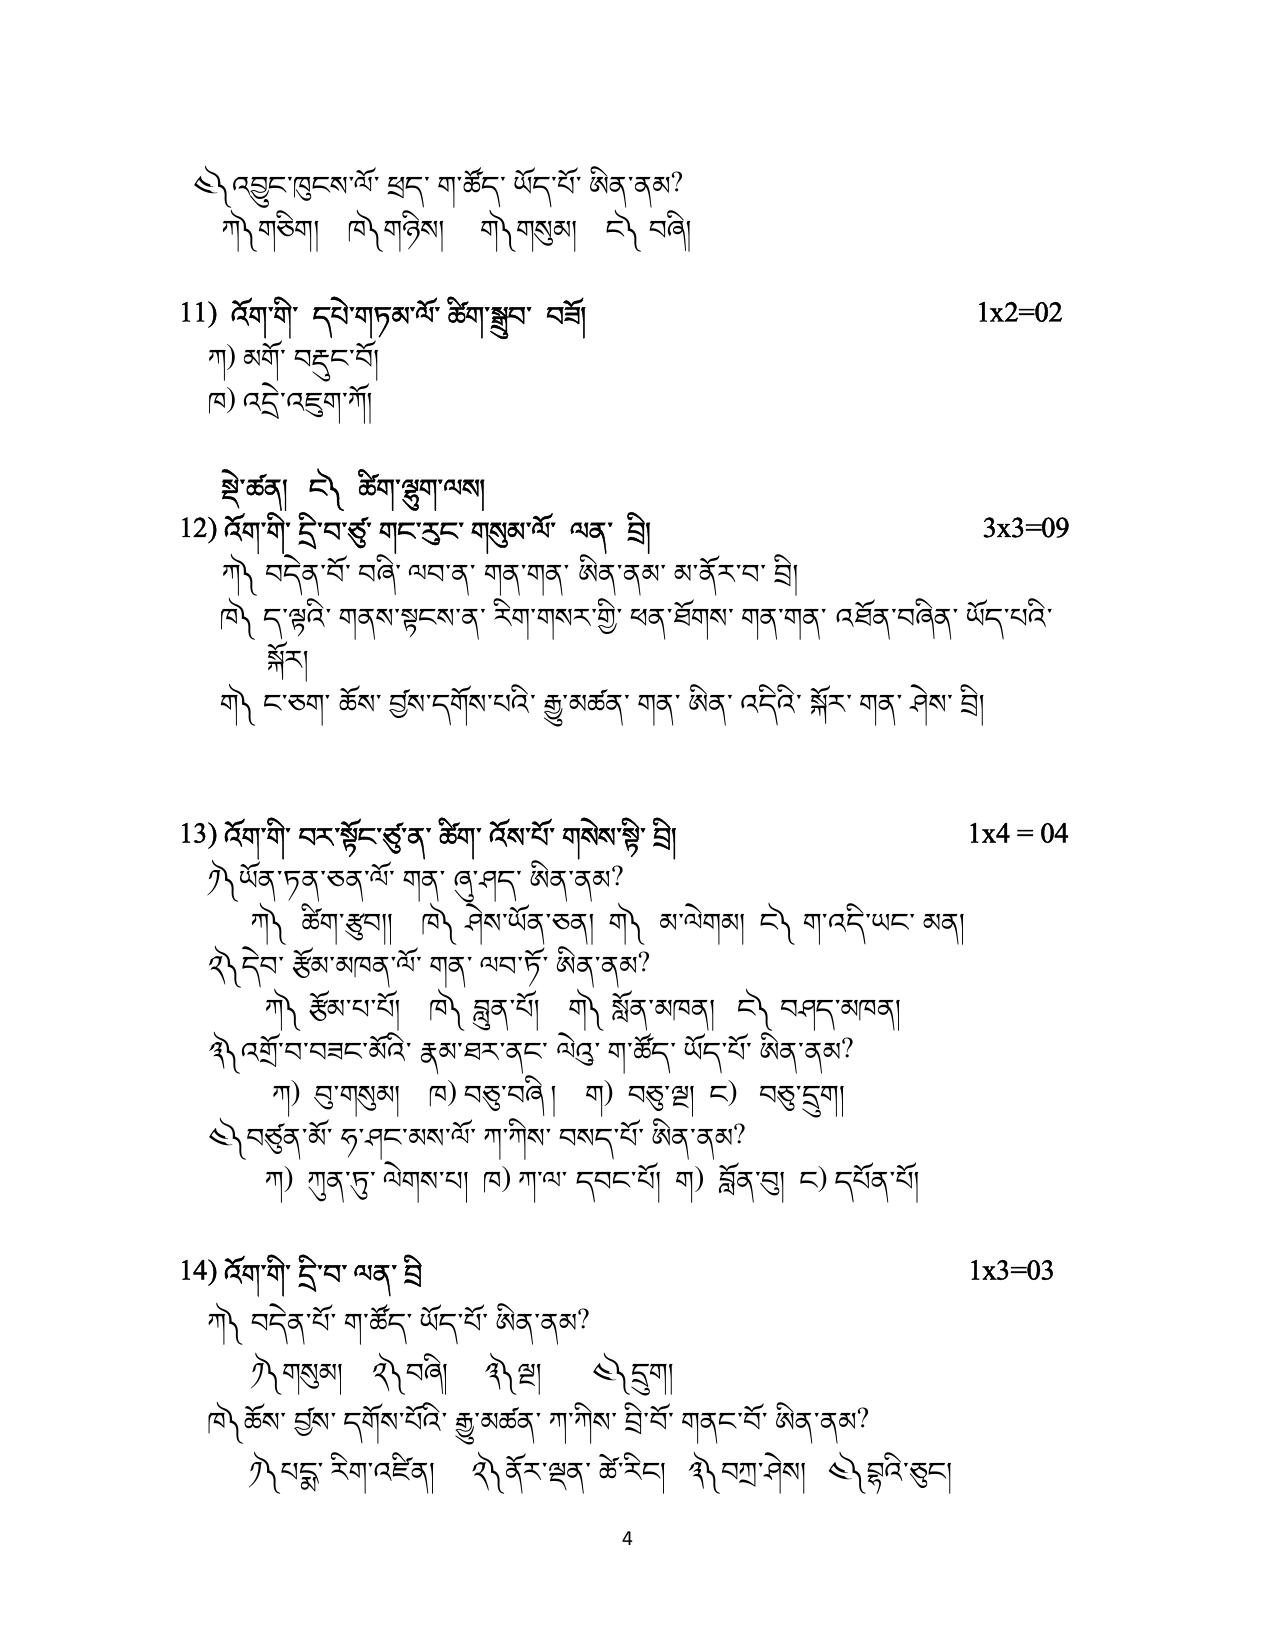 CBSE Class 12 Bhutia Skill Education-Sample Paper 2019-20 - Page 4